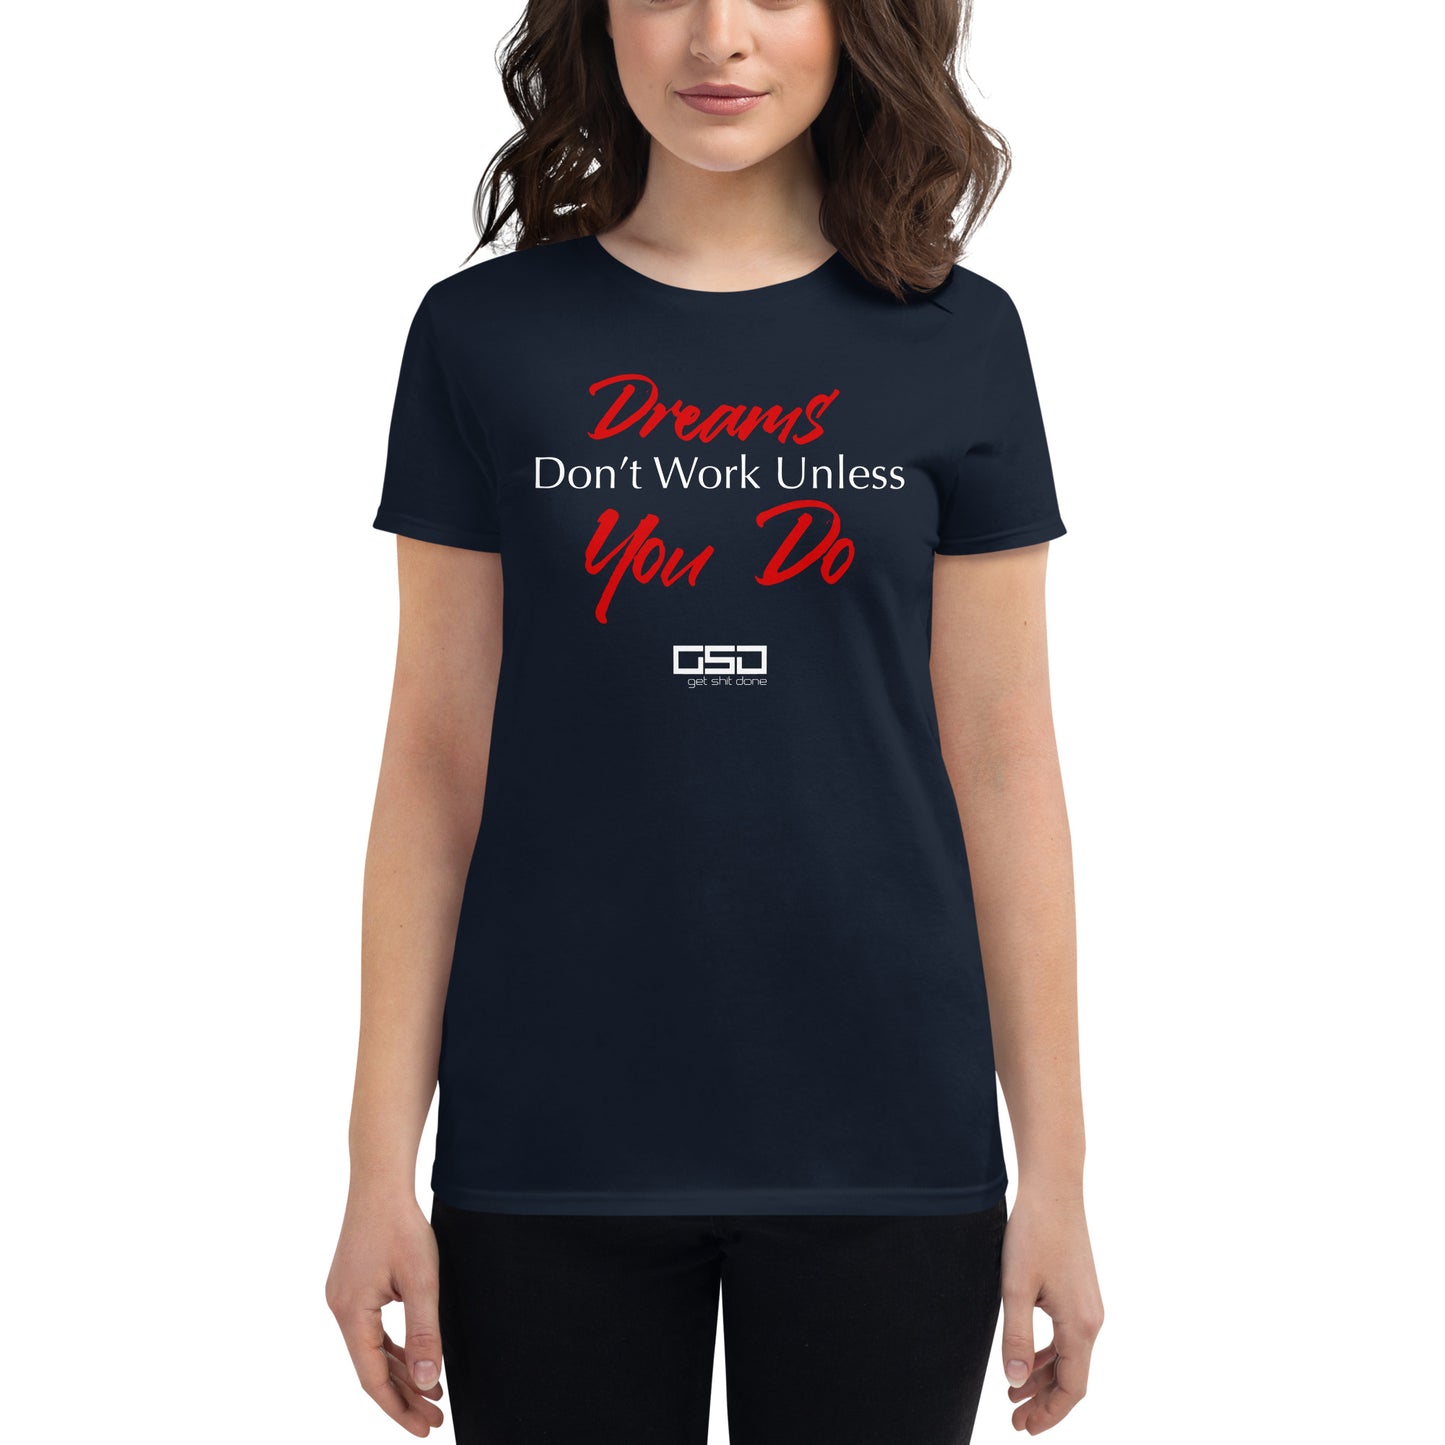 Dreams-Women's short sleeve t-shirt